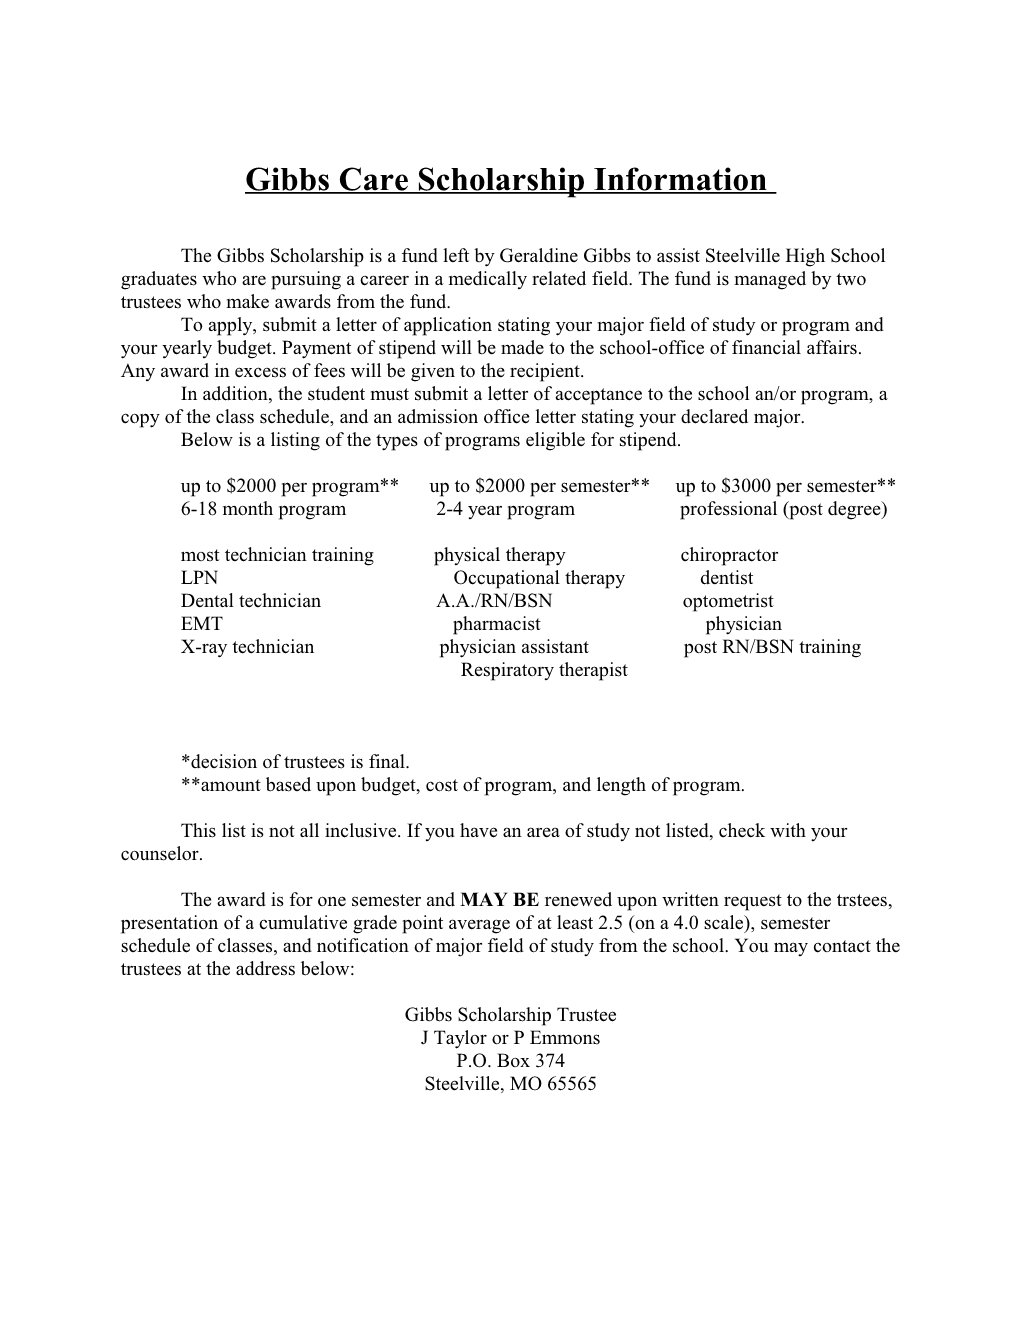 Gibbs Care Scholarship Information 1998-99